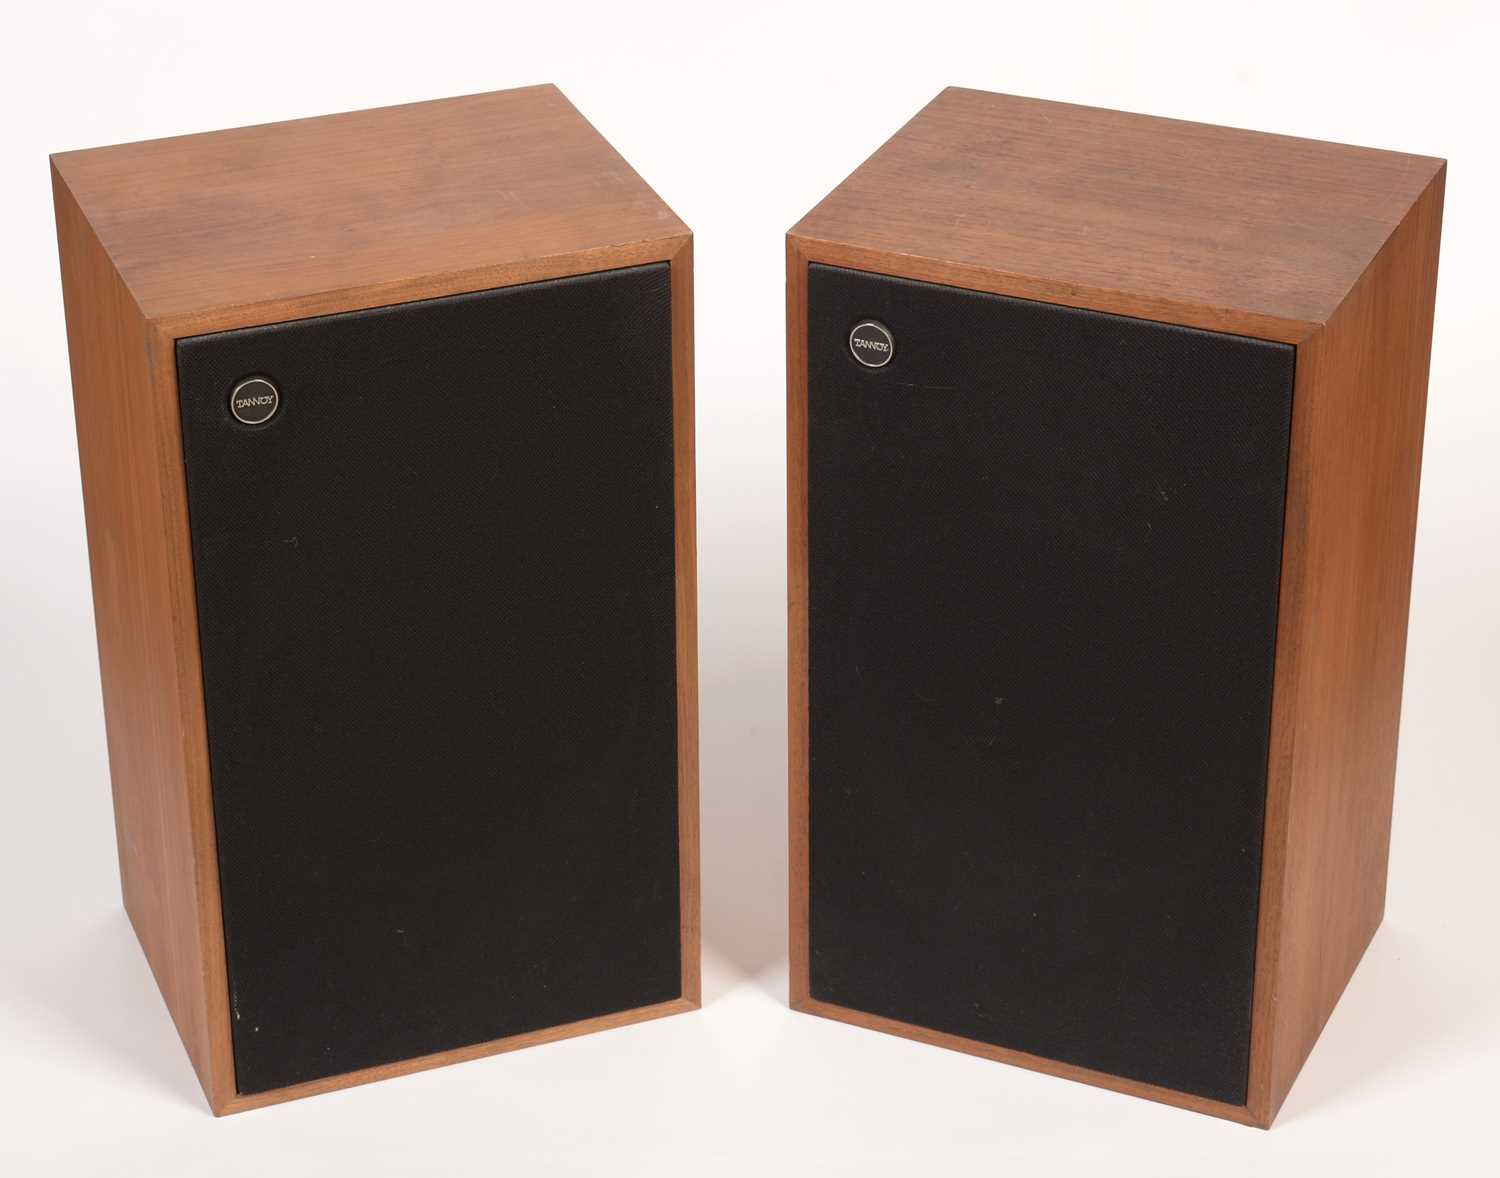 Lot 718 - pair of Tanoy T125 speakers